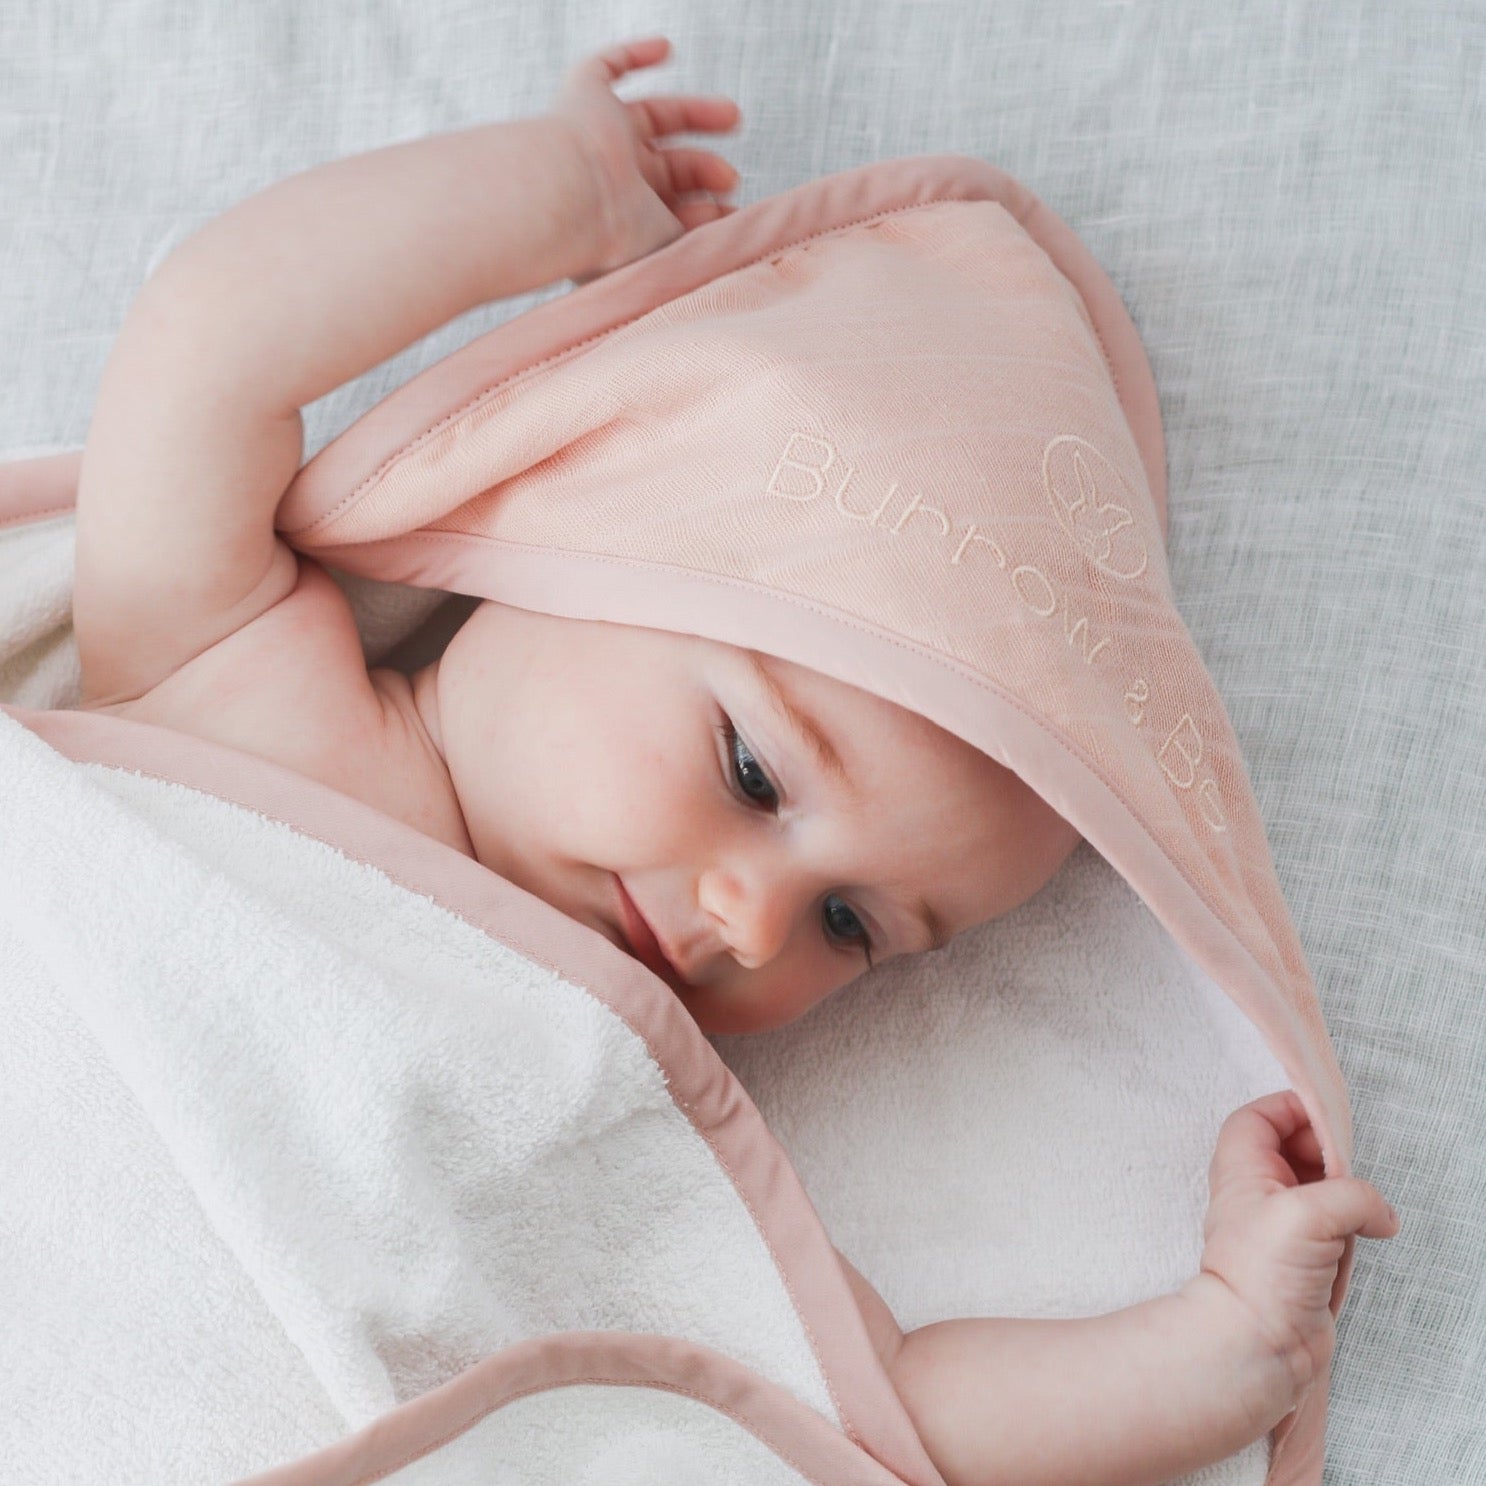 Burrow & Be Baby Hooded Towel - Dusty Rose